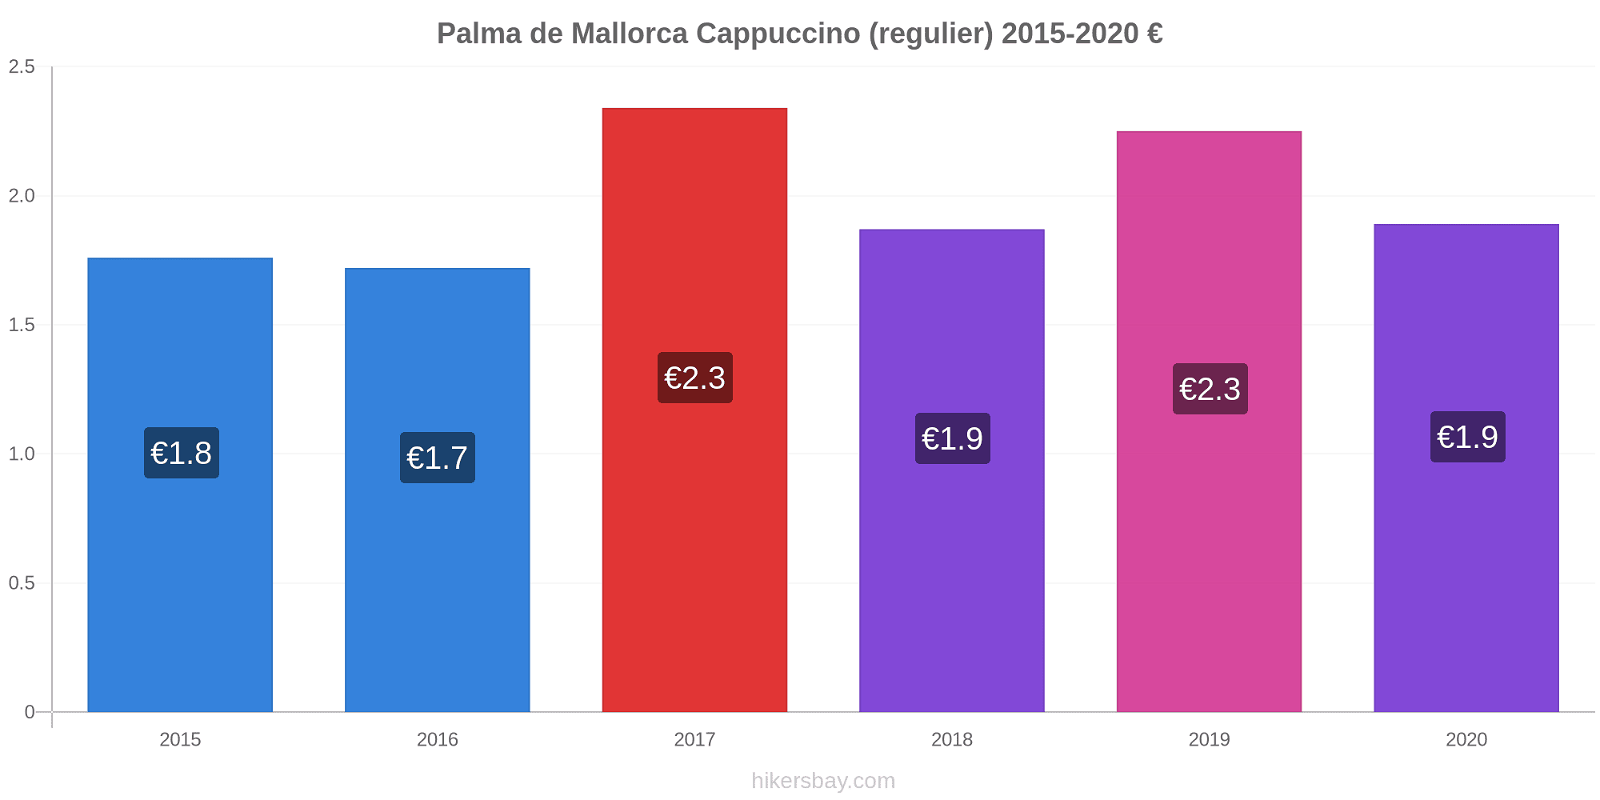 Palma de Mallorca prijswijzigingen Cappuccino (regelmatige) hikersbay.com